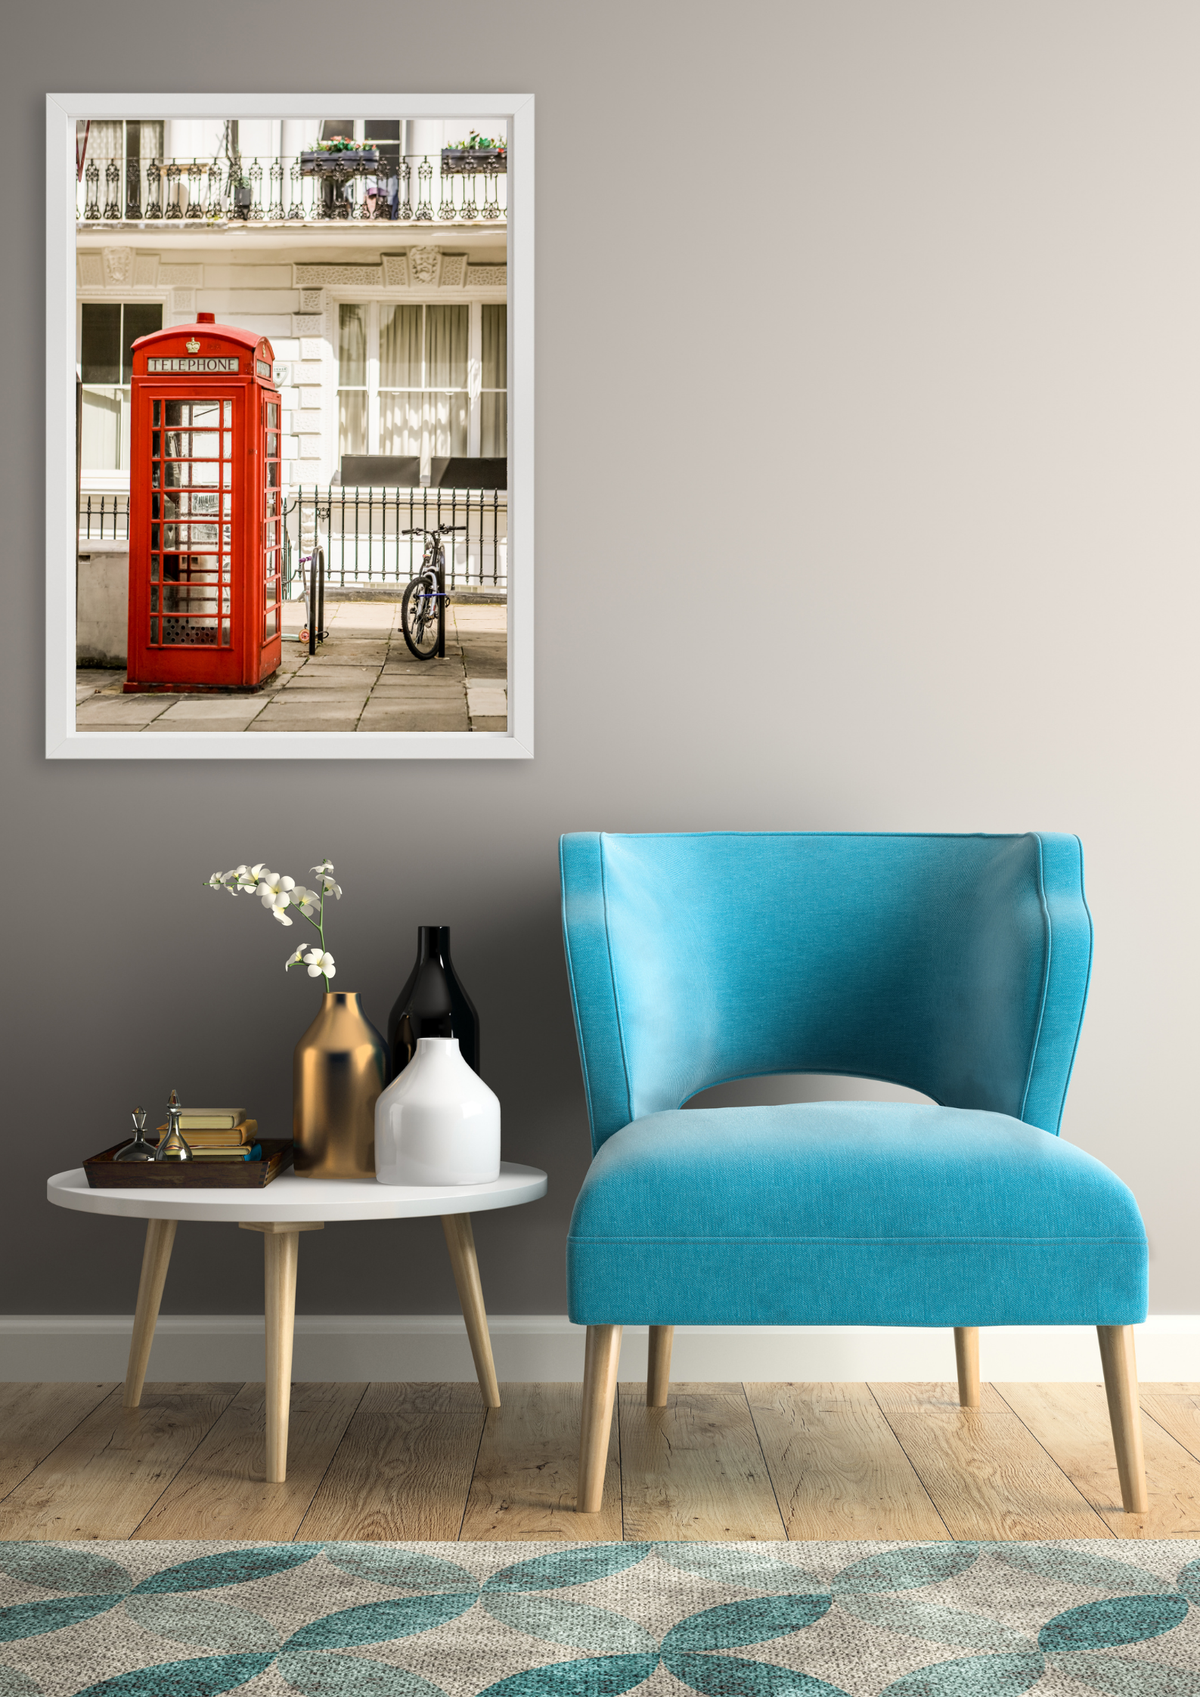 Colour My World - Classic London Red Phonebox Photographic Art Print